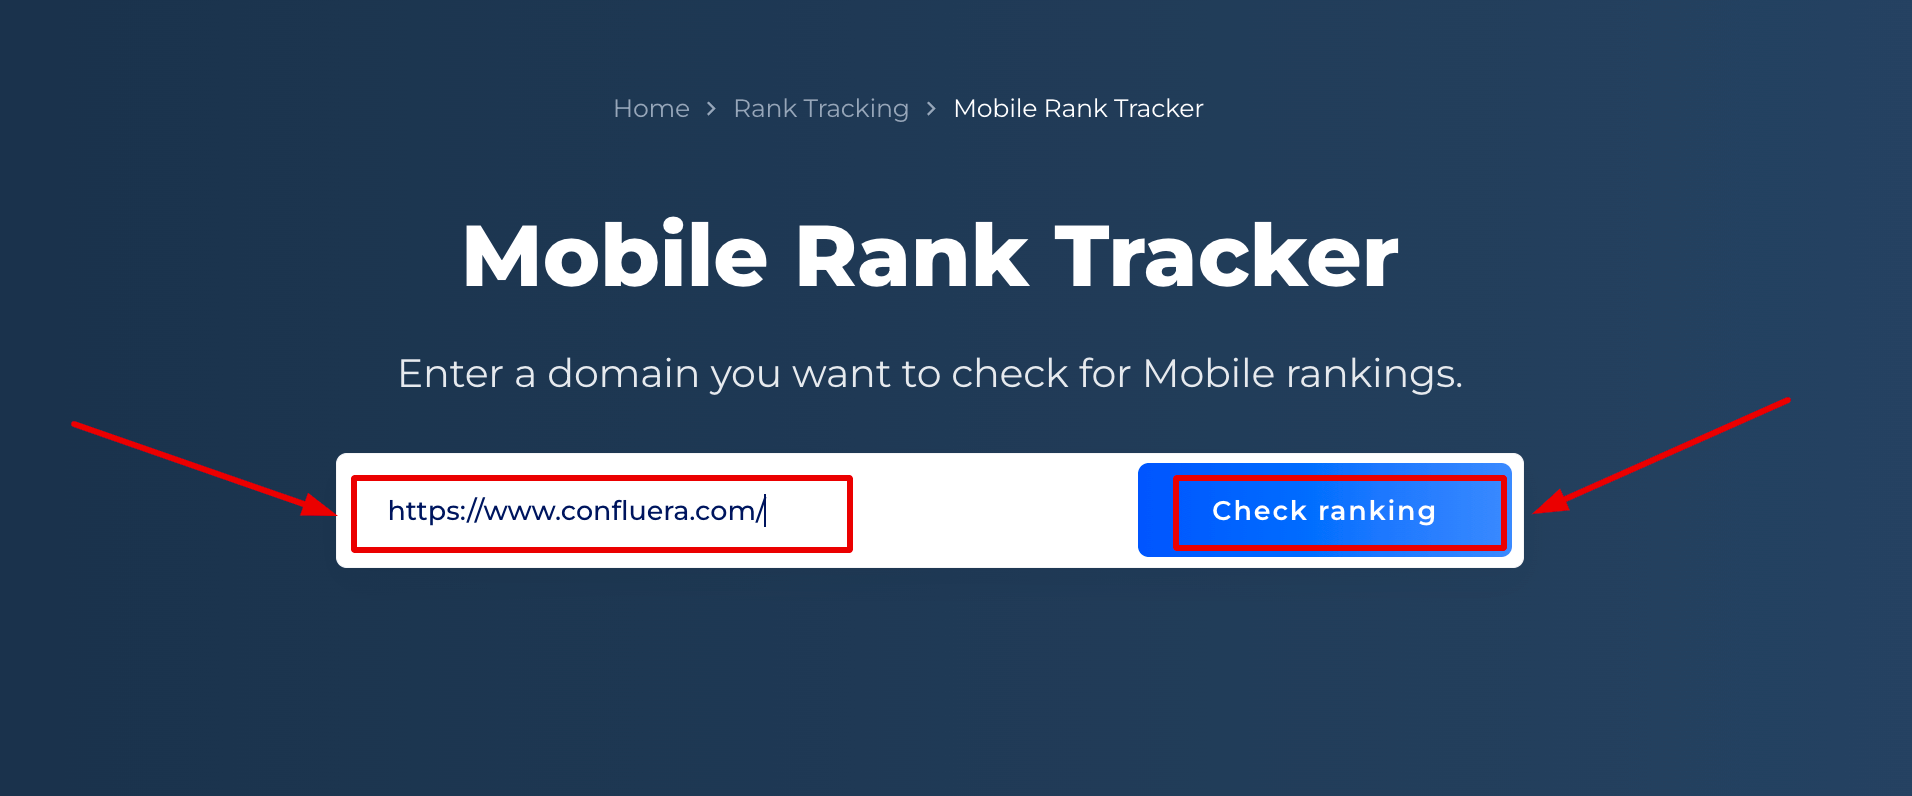 Mobile Rank Tracker